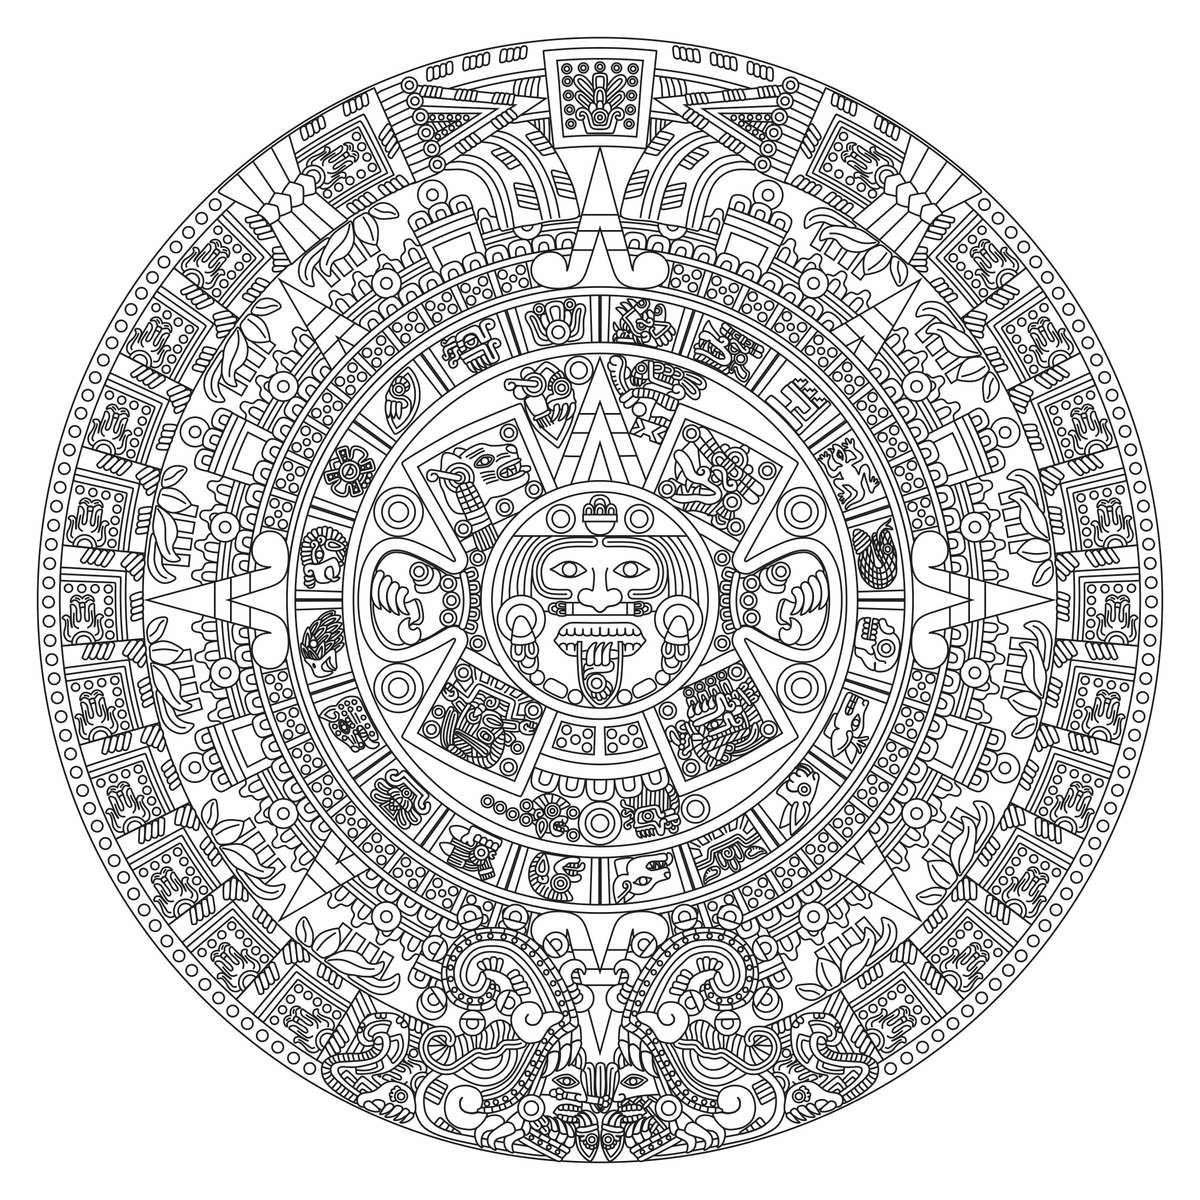 Aztec calendar jigsaw puzzle online